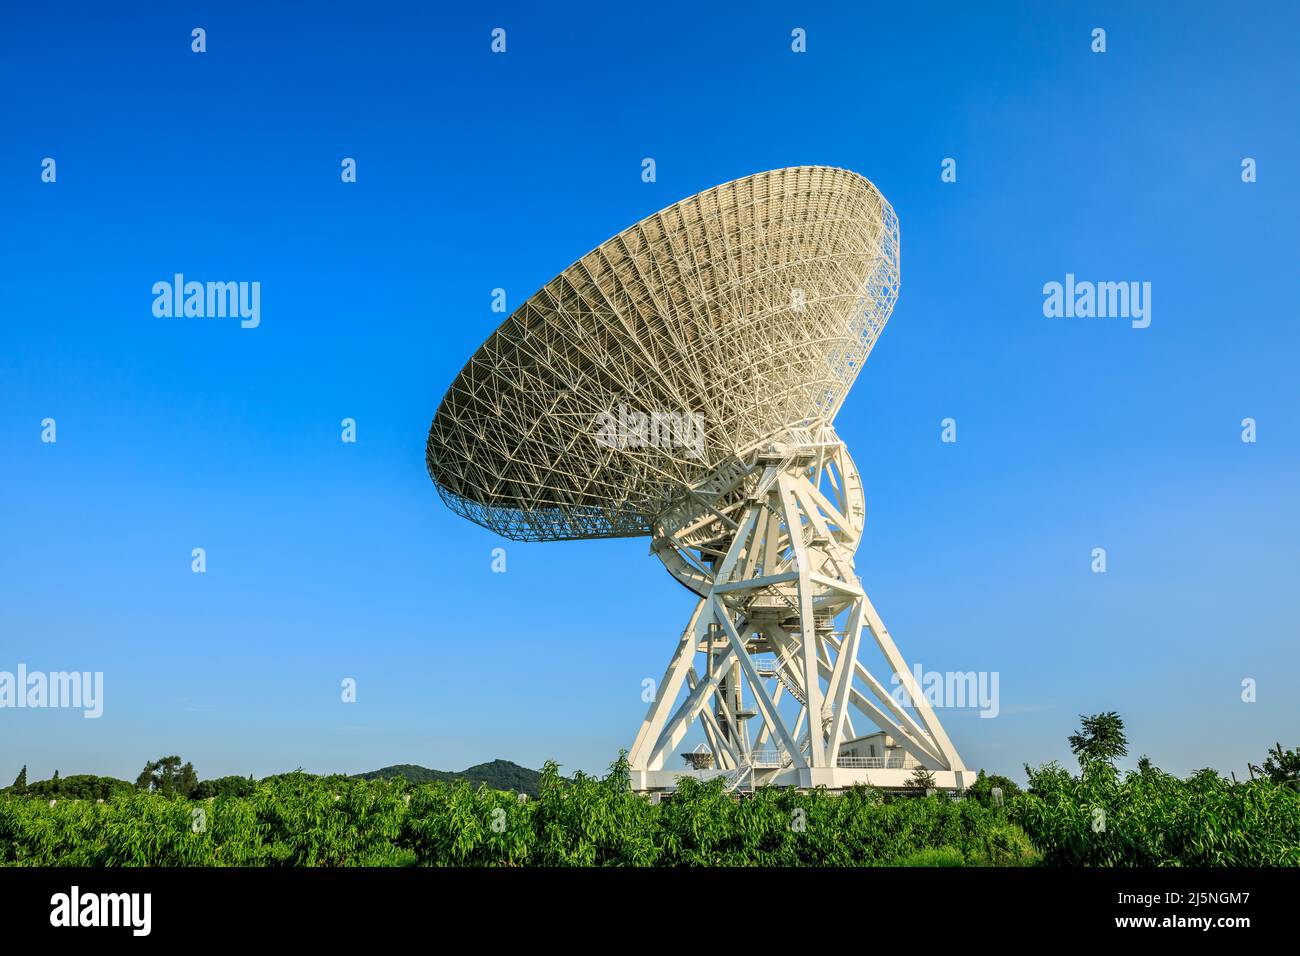 Astronomical radio telescope under blue sky Stock Photo